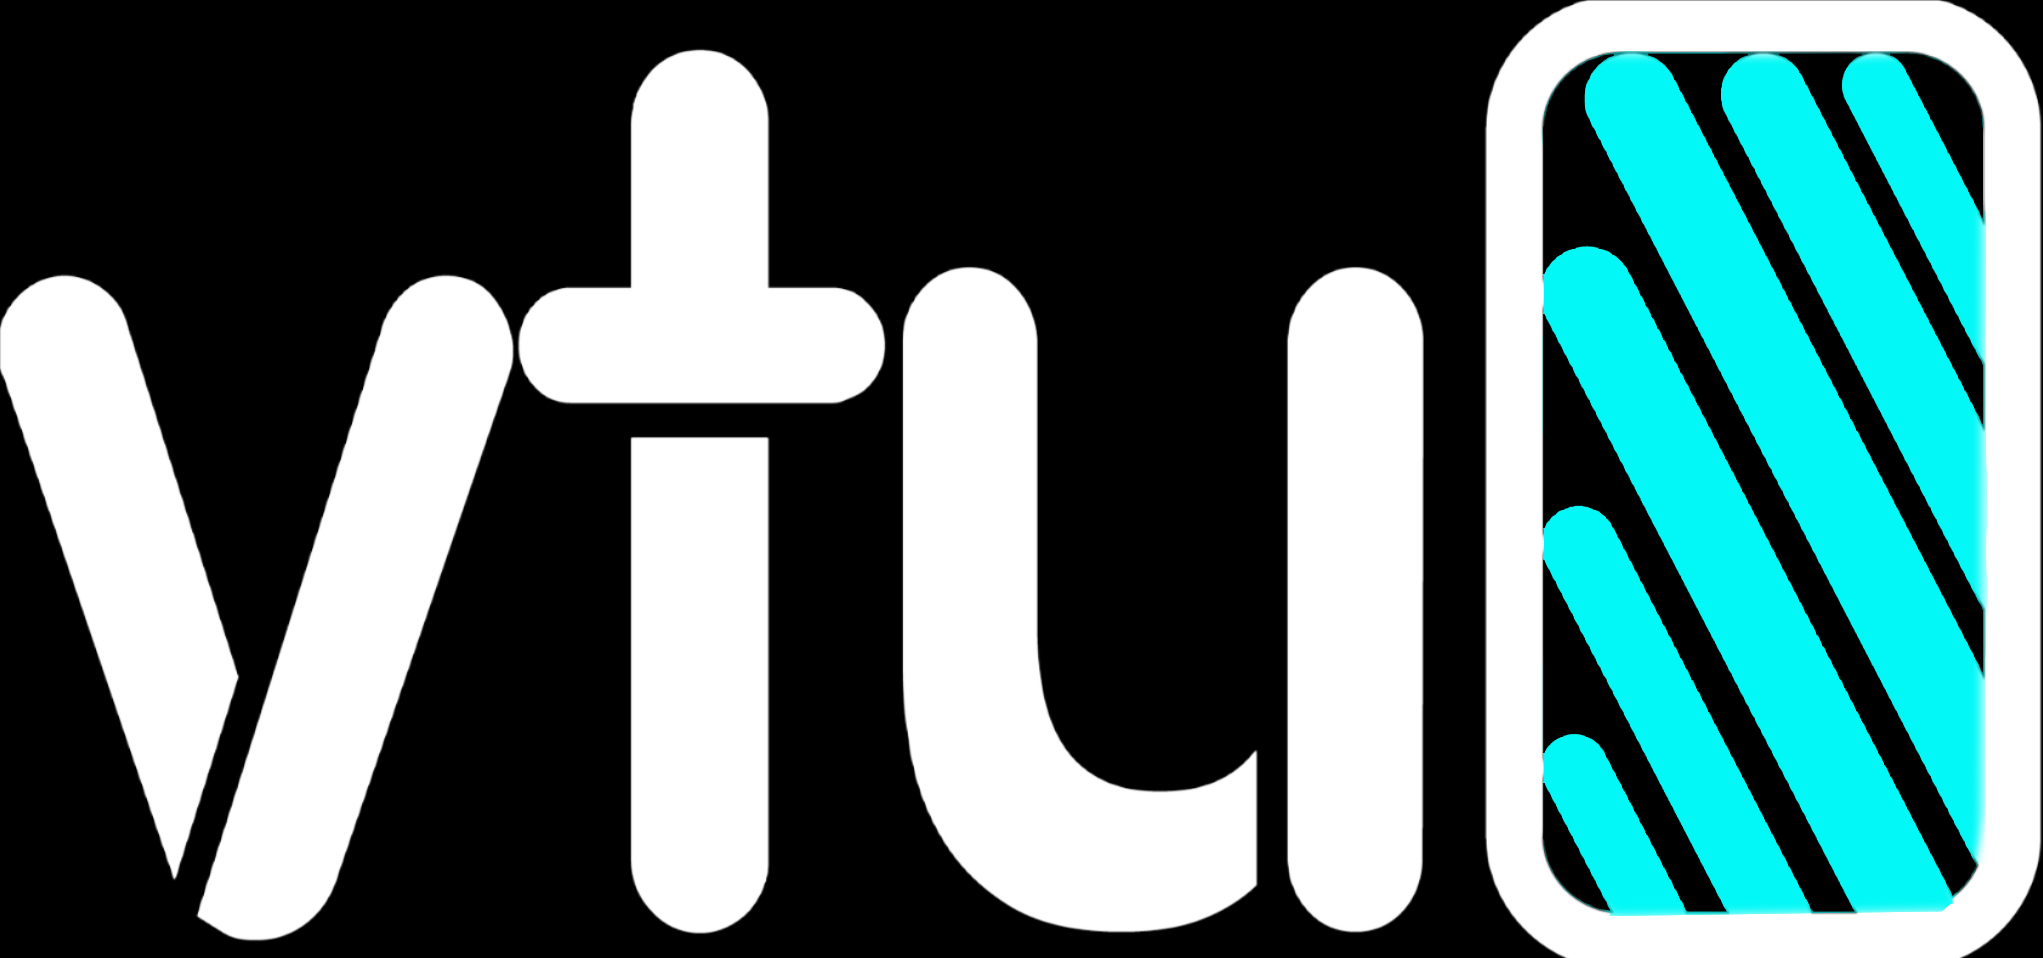 VTU Logo